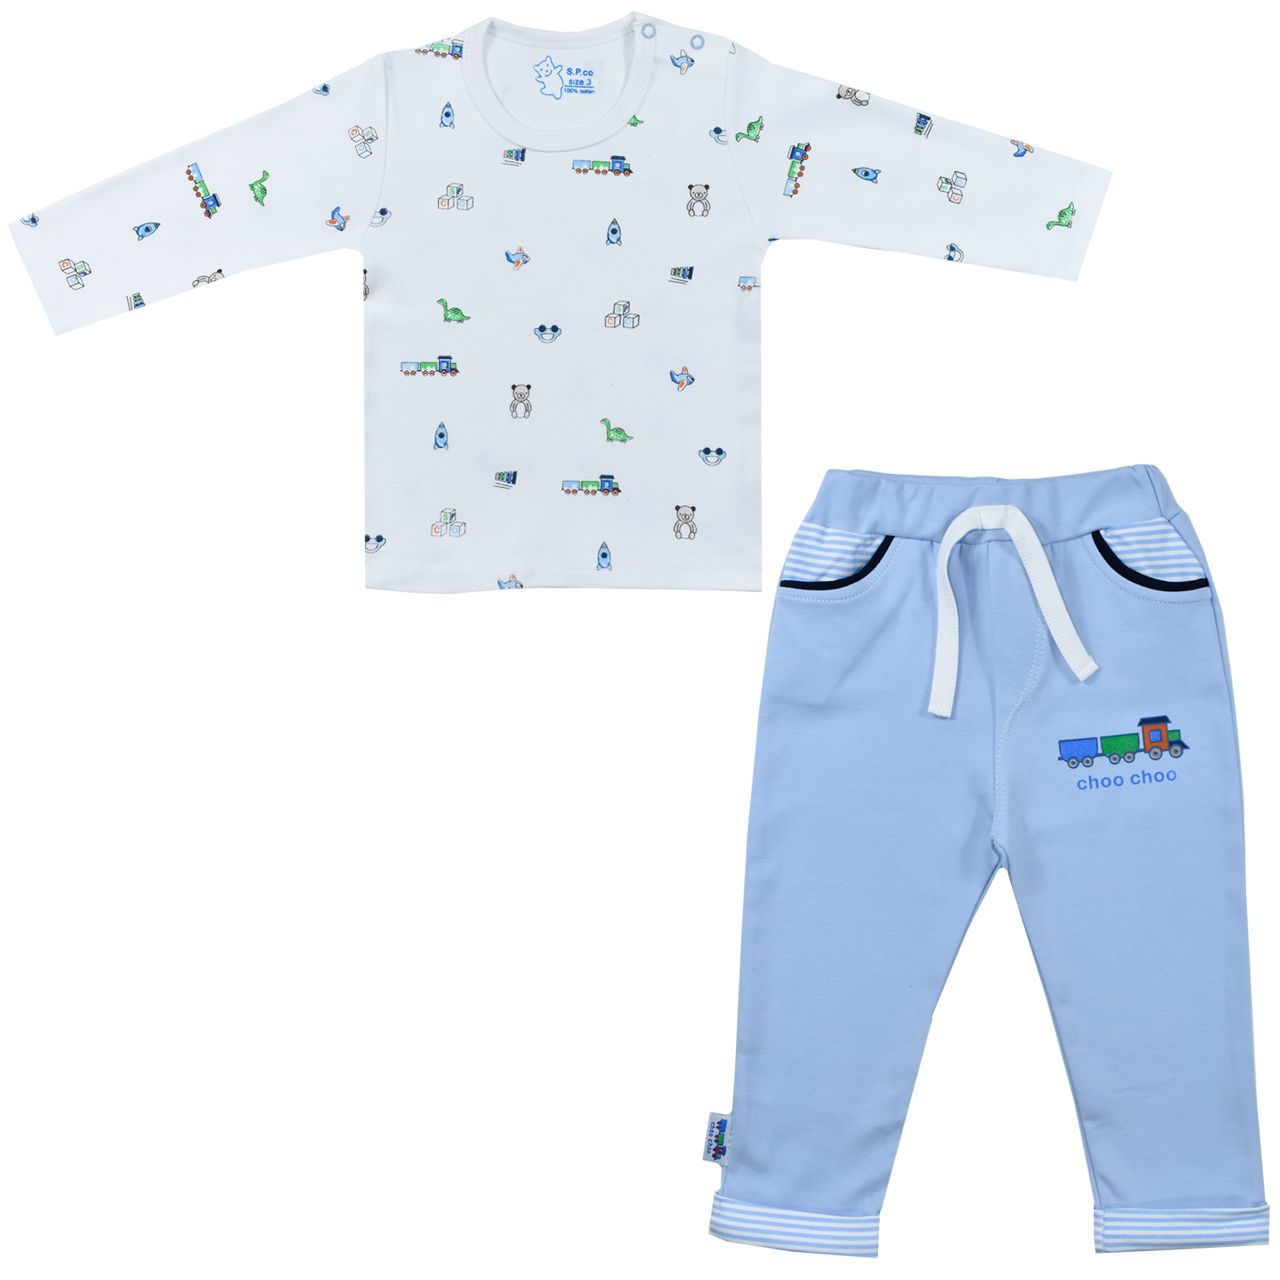 ست تی شرت و شلوار نوزادی اسپیکو مدل ترن کد 2